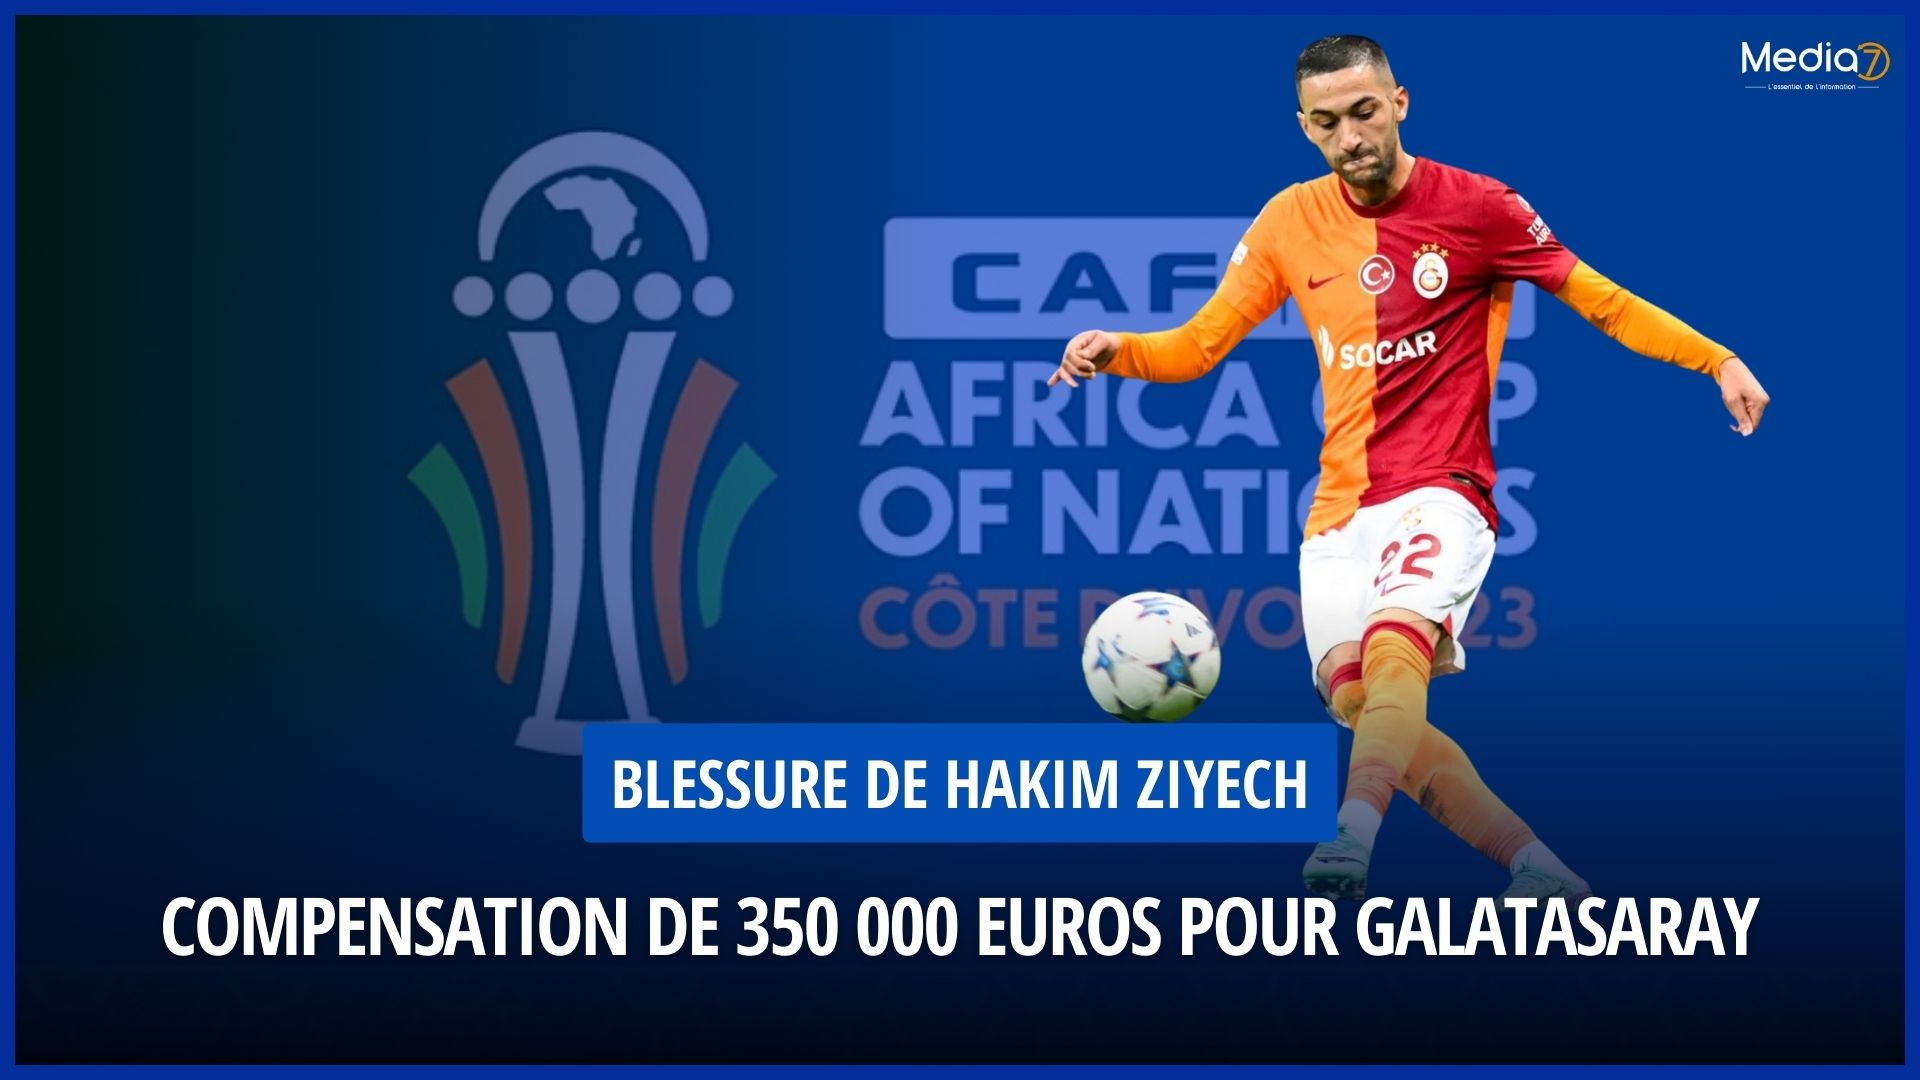 Hakim Ziyech injury: Compensation of 350,000 euros for Galatasaray - Media7